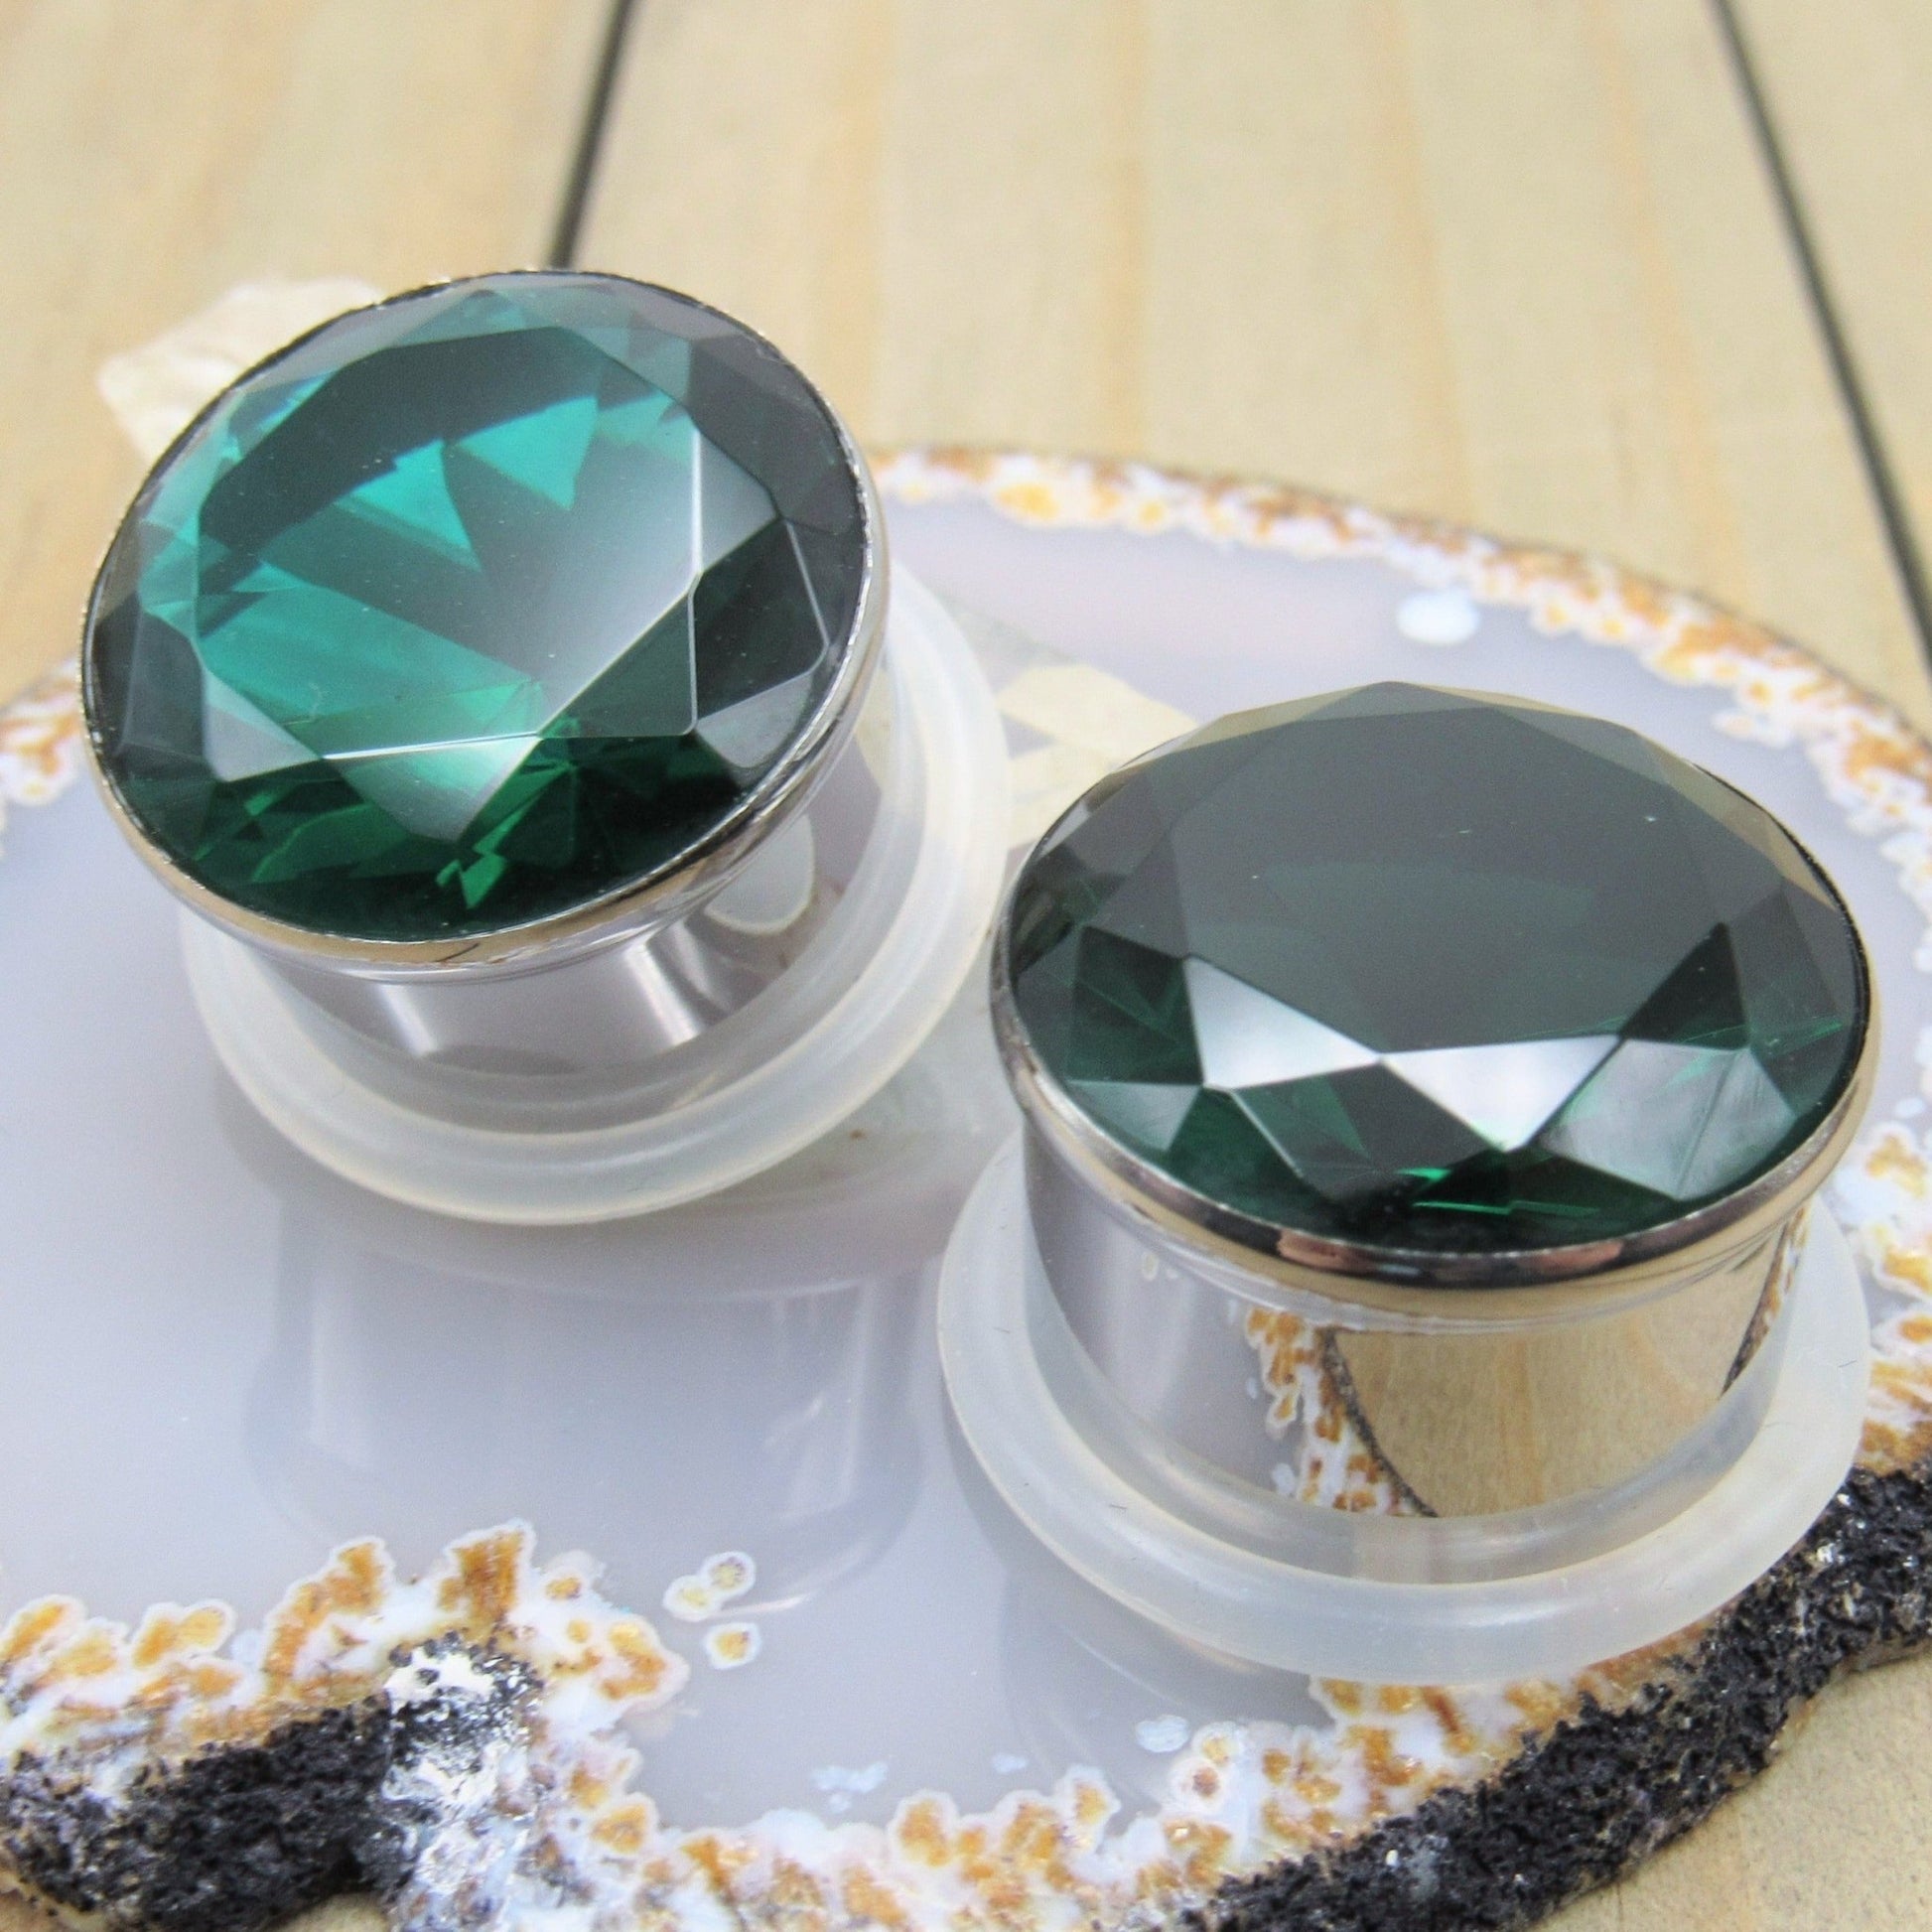 Dark emerald green cz gemstone single flare plug earrings set silver stainless steel pair 3/4" clear o ring backs - Siren Body Jewelry